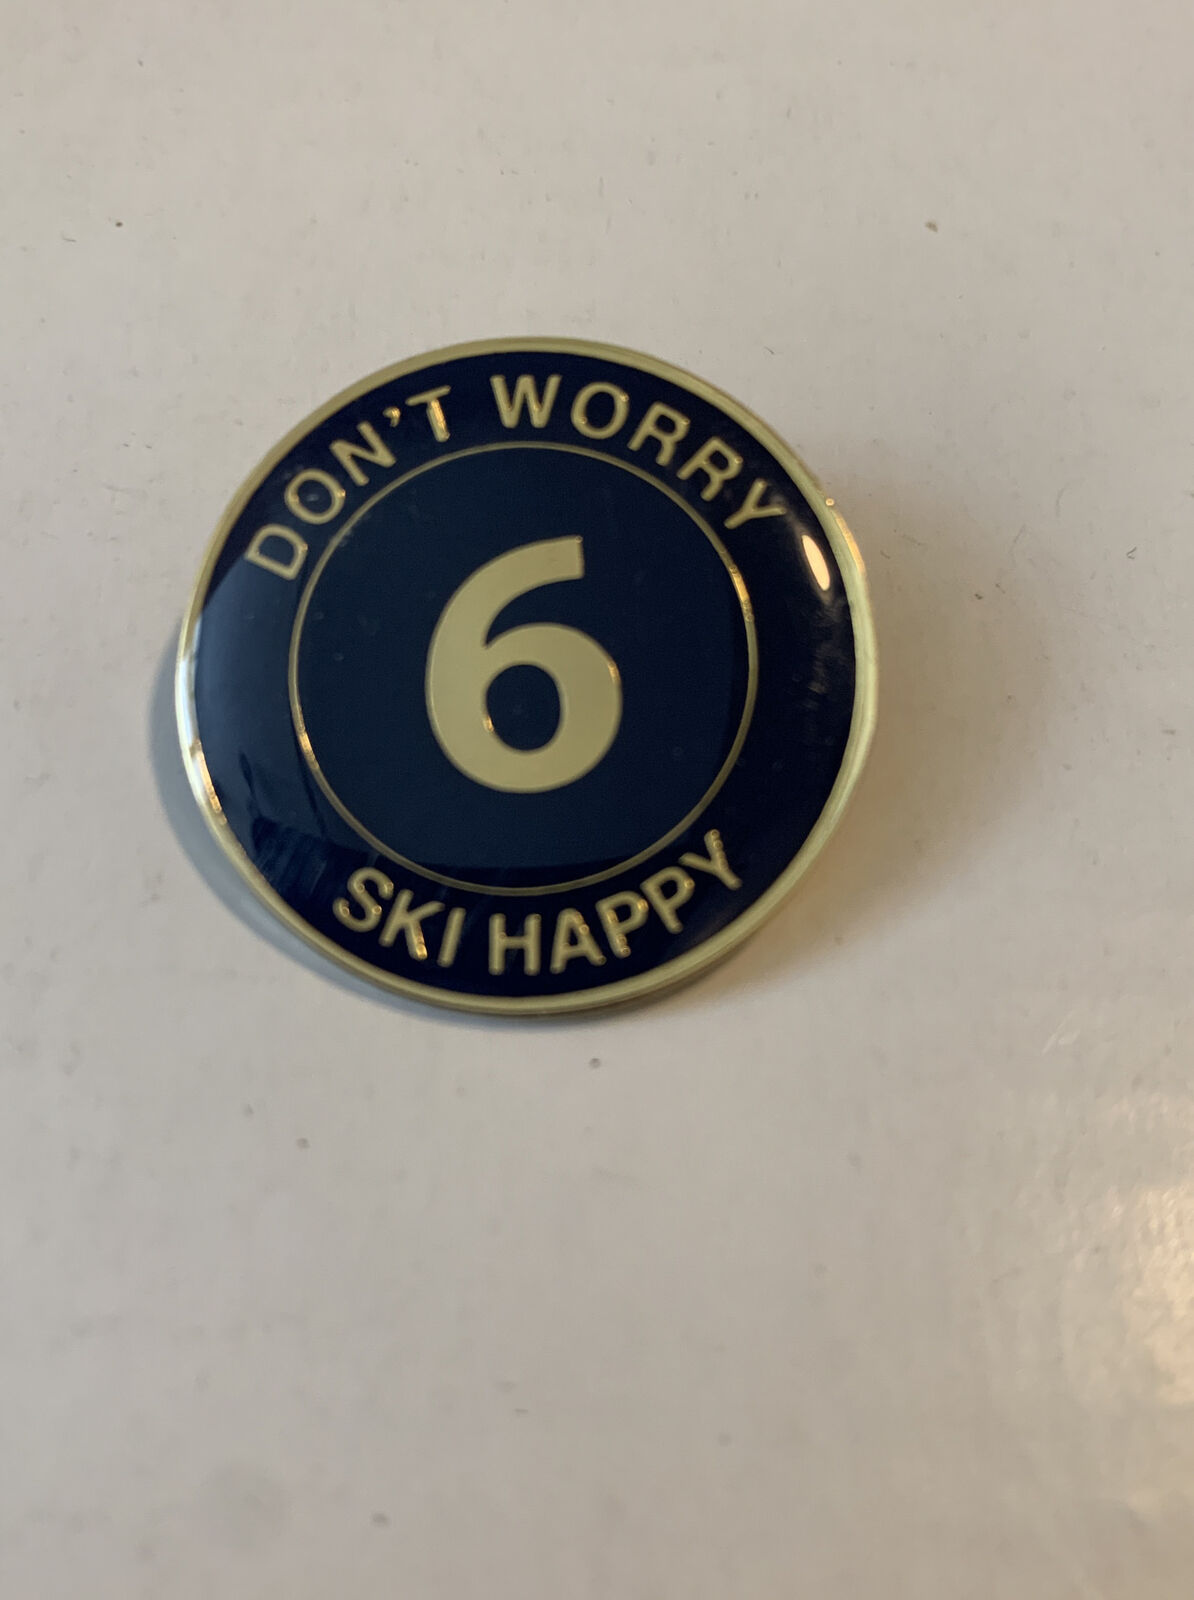 Don’t Worry Ski Happy 6 Skiing Pin Souvenir J19